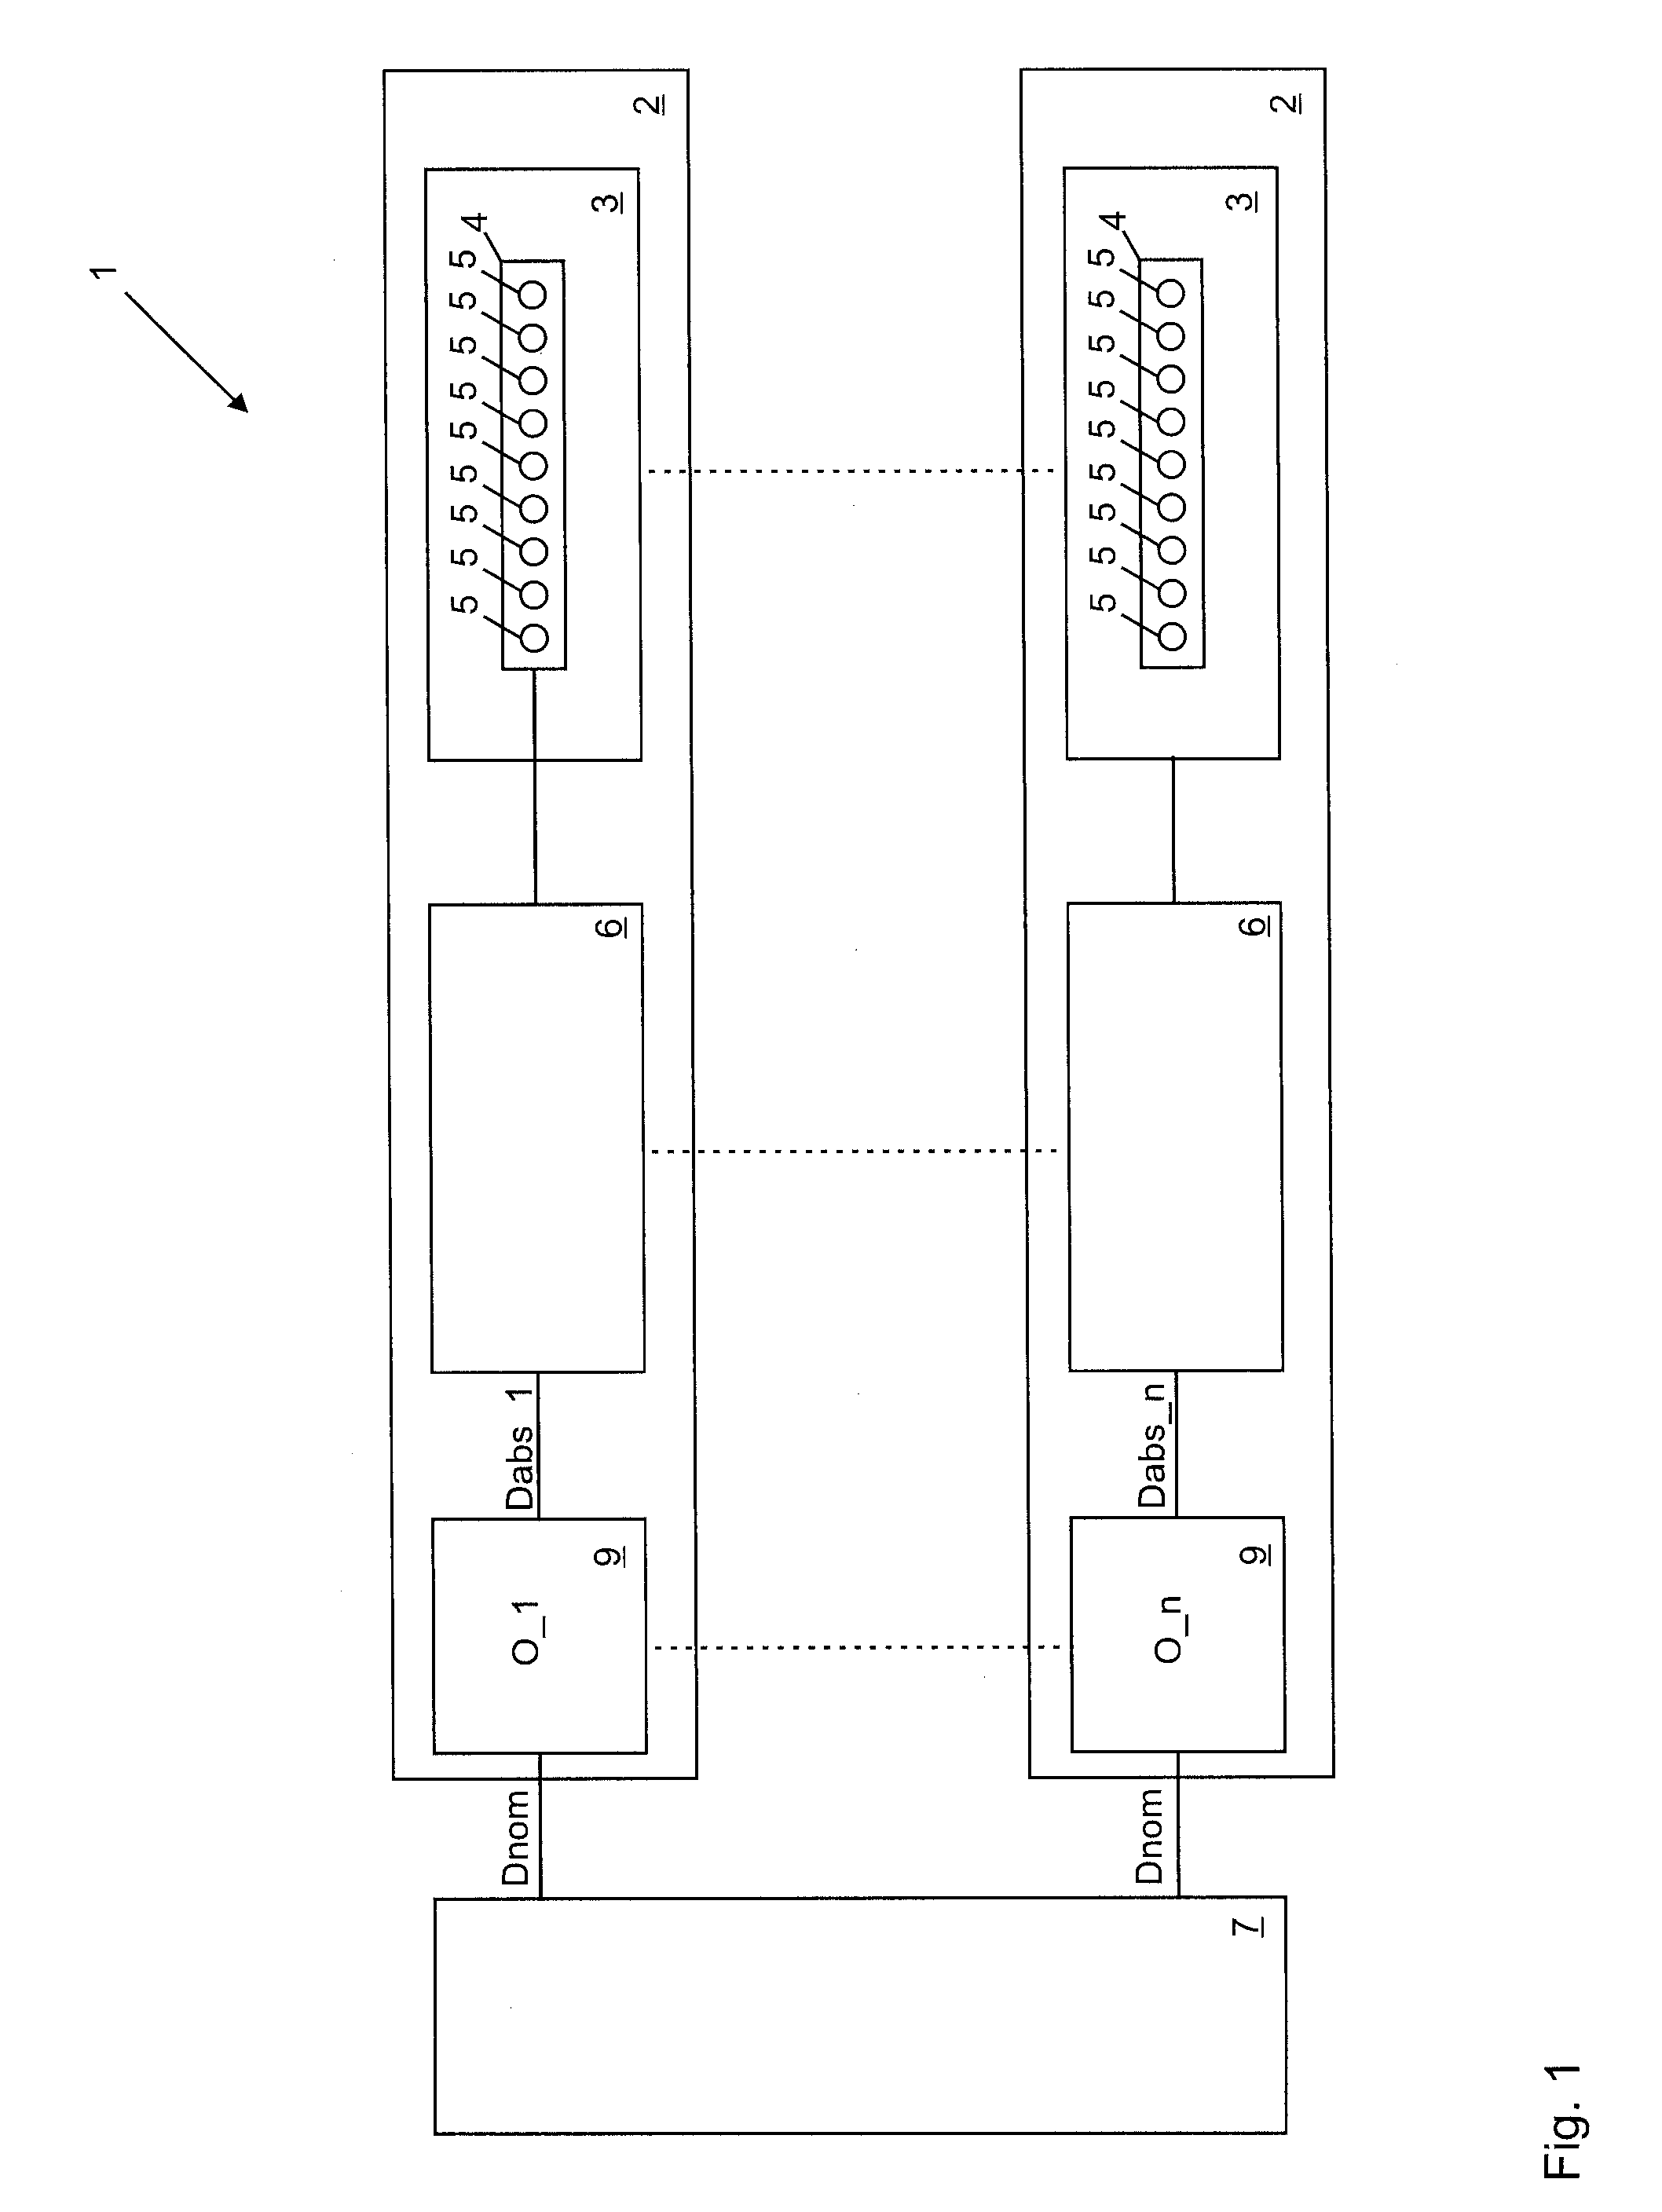 Illumination apparatus and method for operating the illumination apparatus in a dim mode